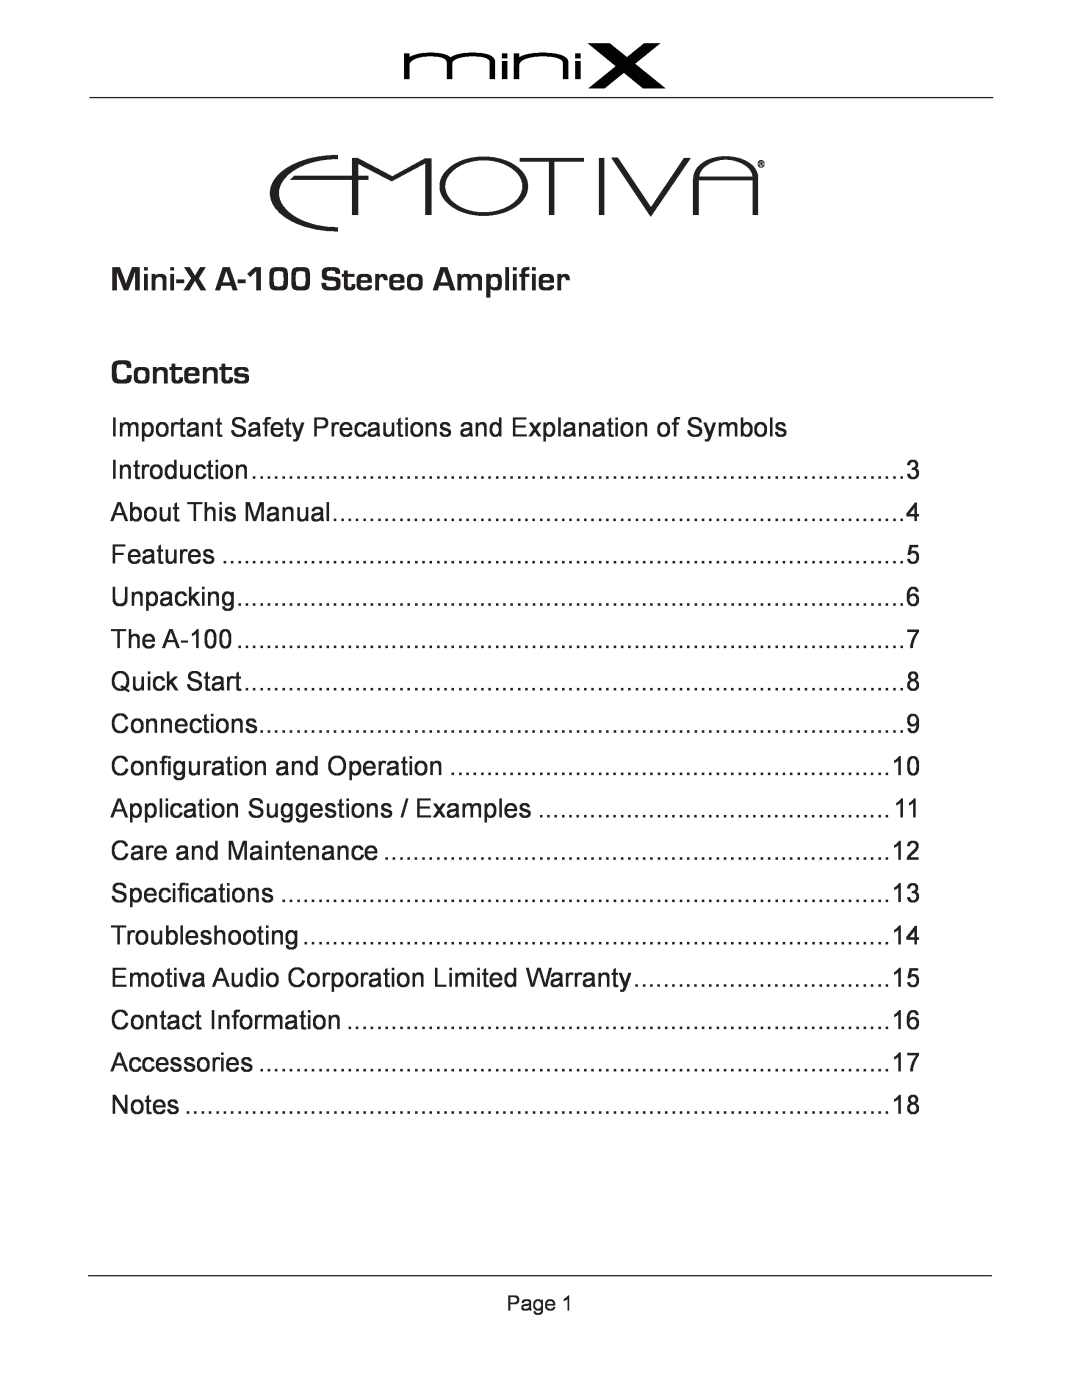 Emotiva user manual Mini-X A-100Stereo Amplifier, Contents 